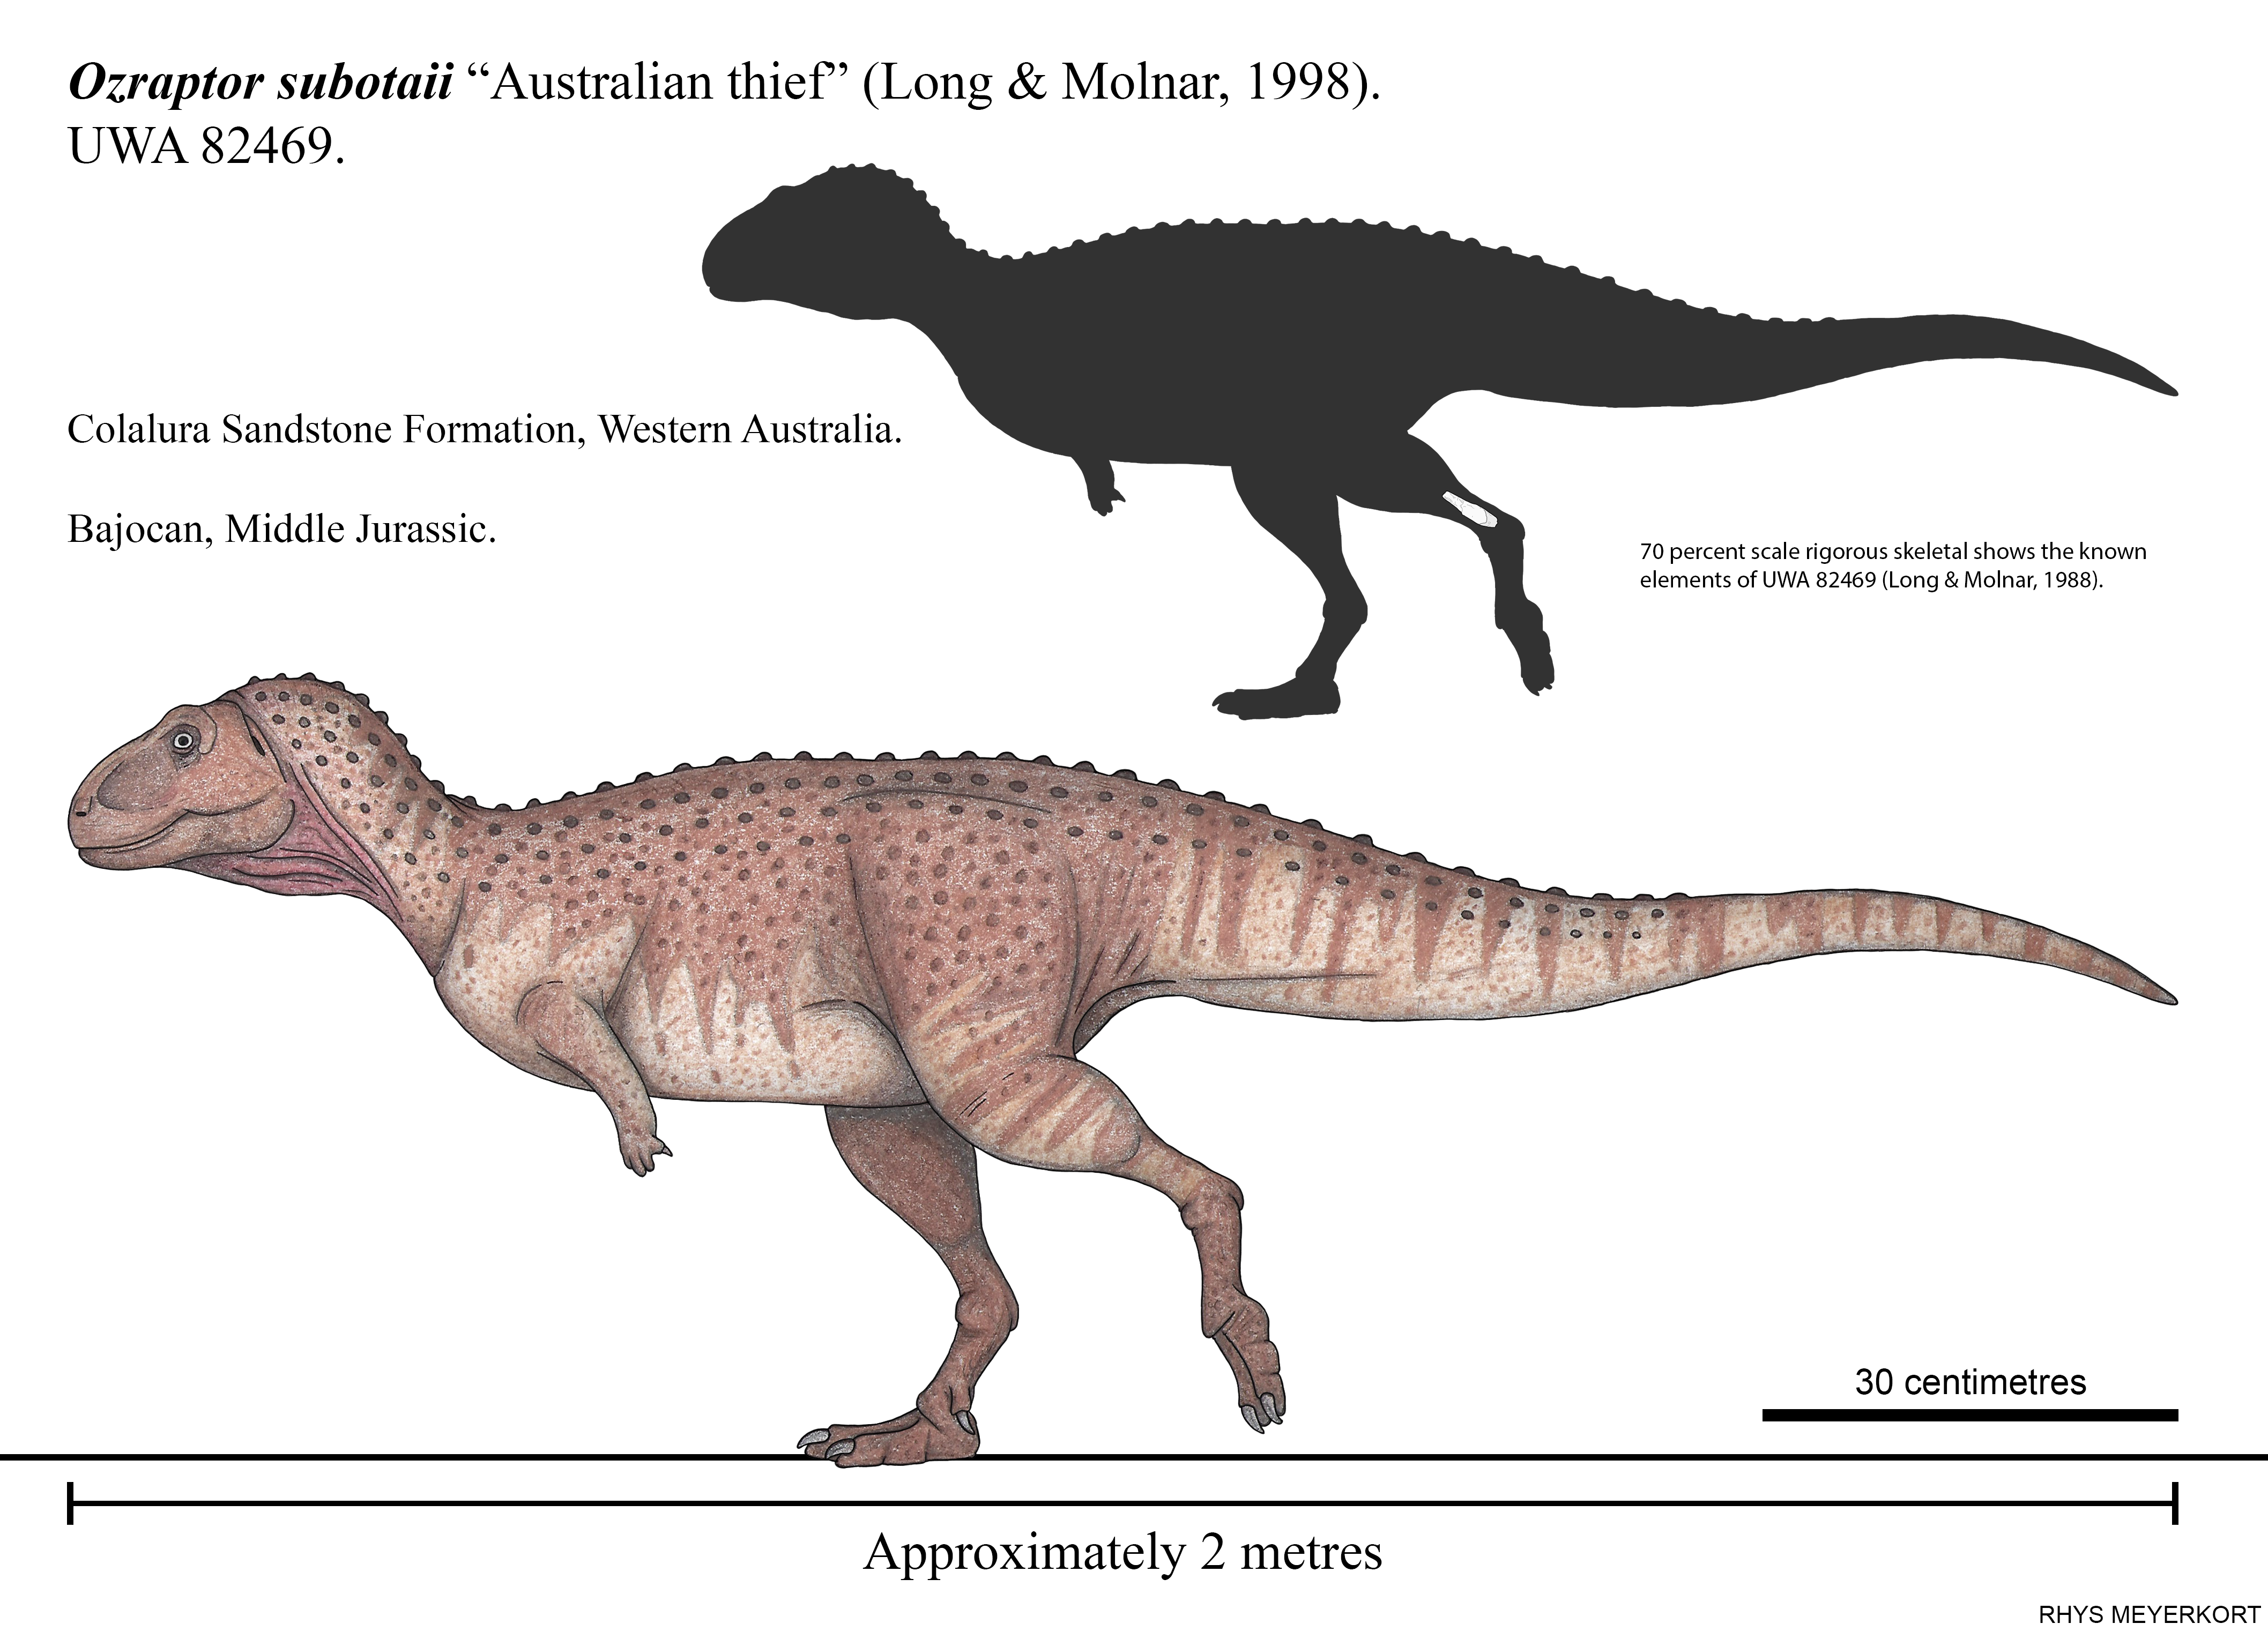 Carnotaurus for Wikipedia by FredtheDinosaurman on DeviantArt